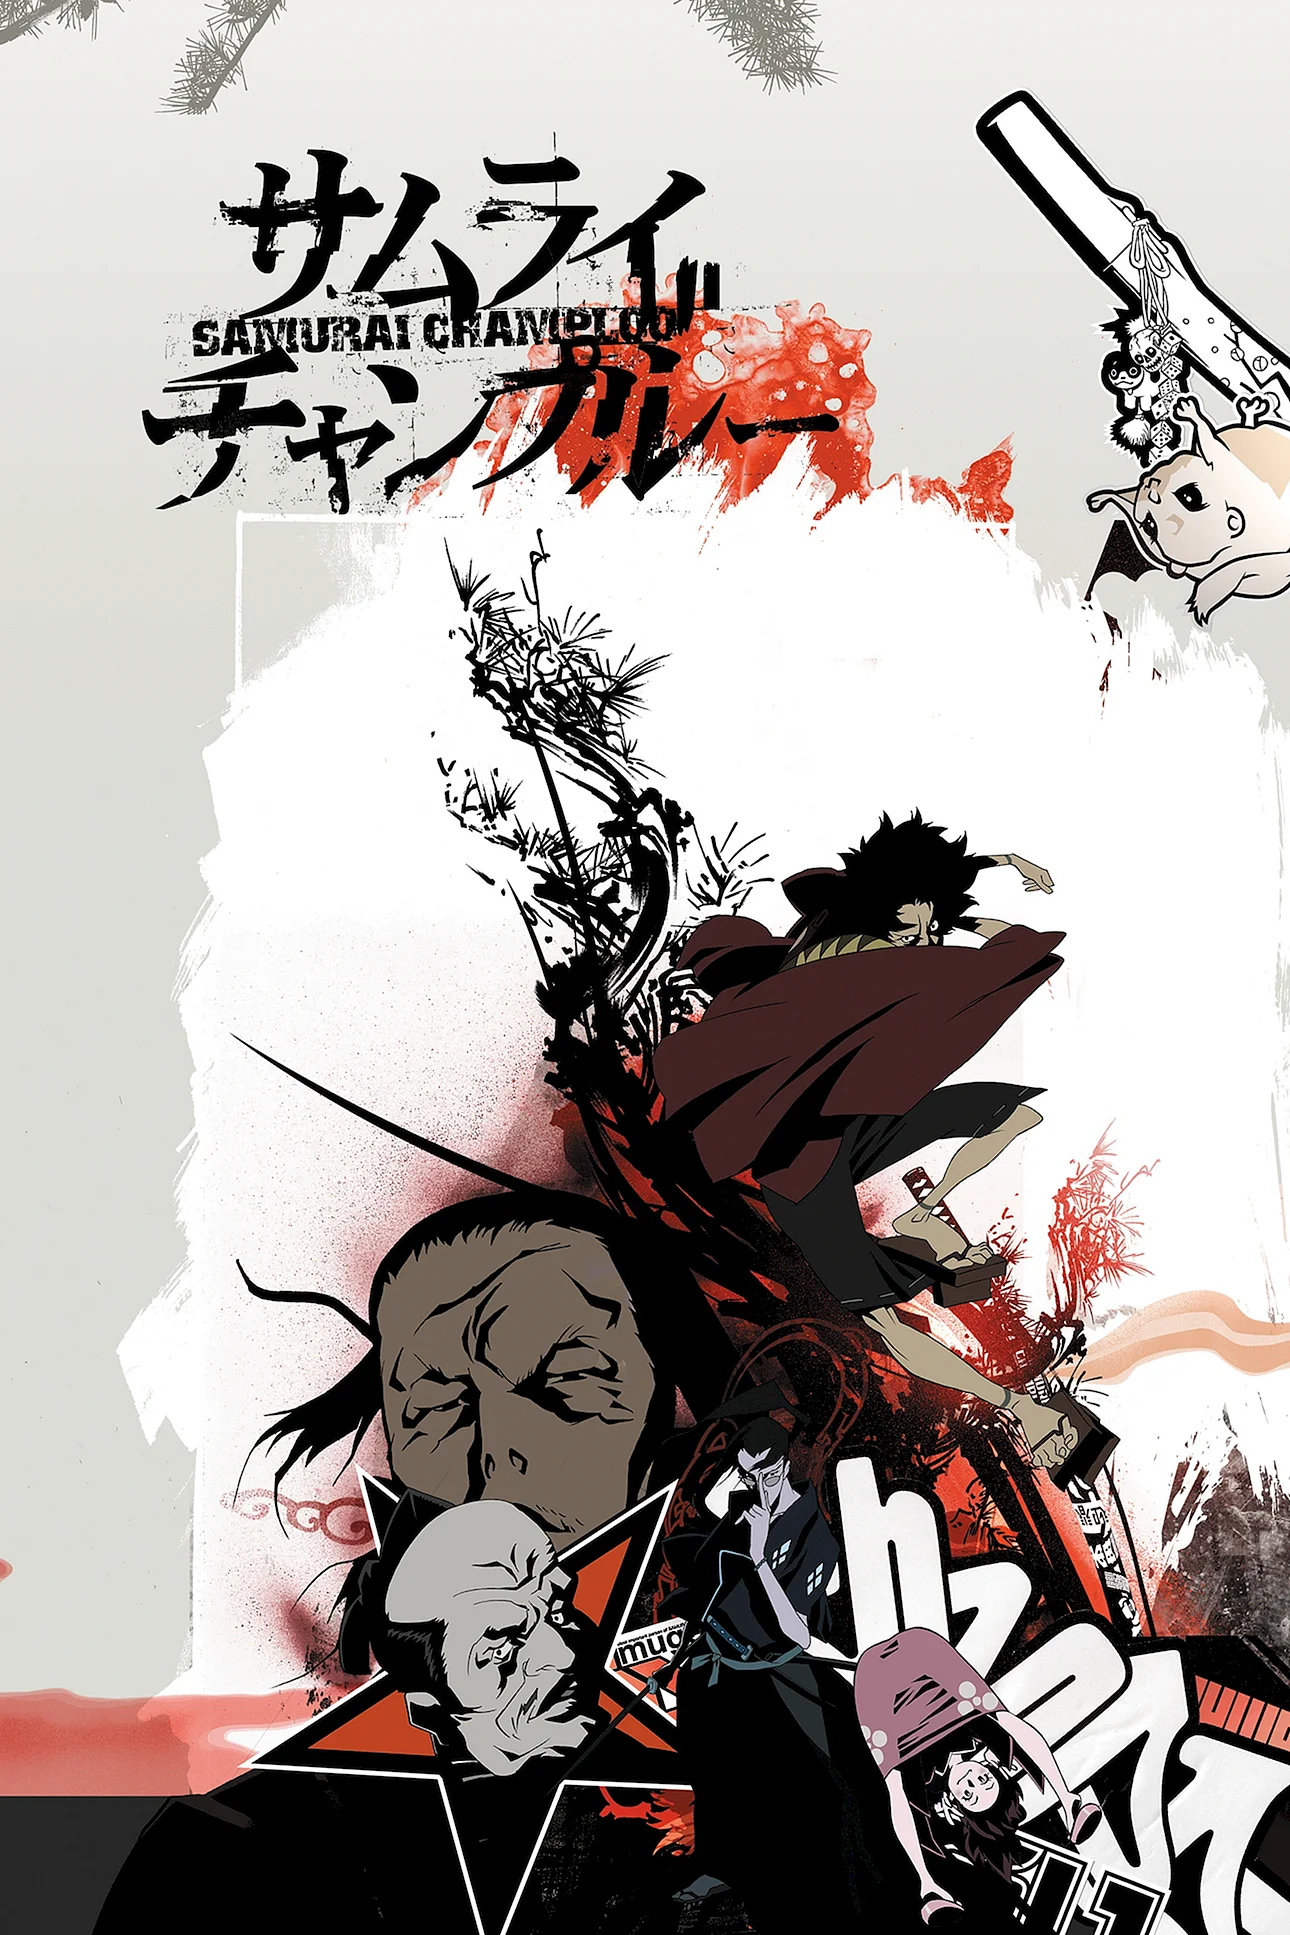 Samurai Champloo Poster Wallpaper For iPhone